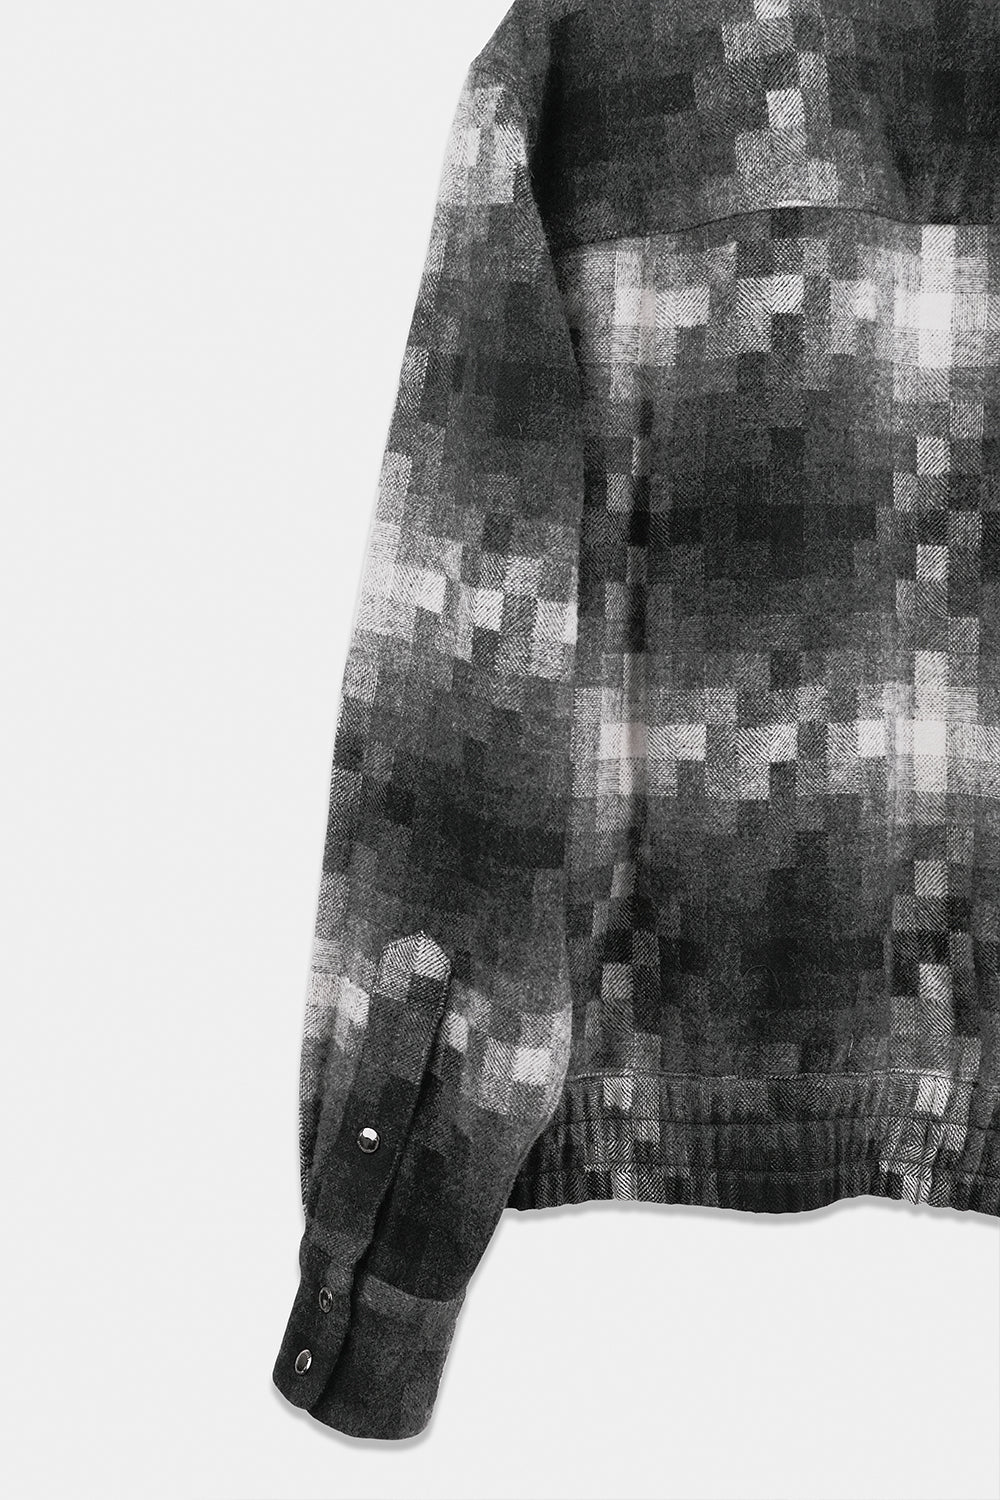 SEANNUNG - MEN - Plaid Pattern Wool Jacket Look Shirt 格紋毛料外套式襯衫